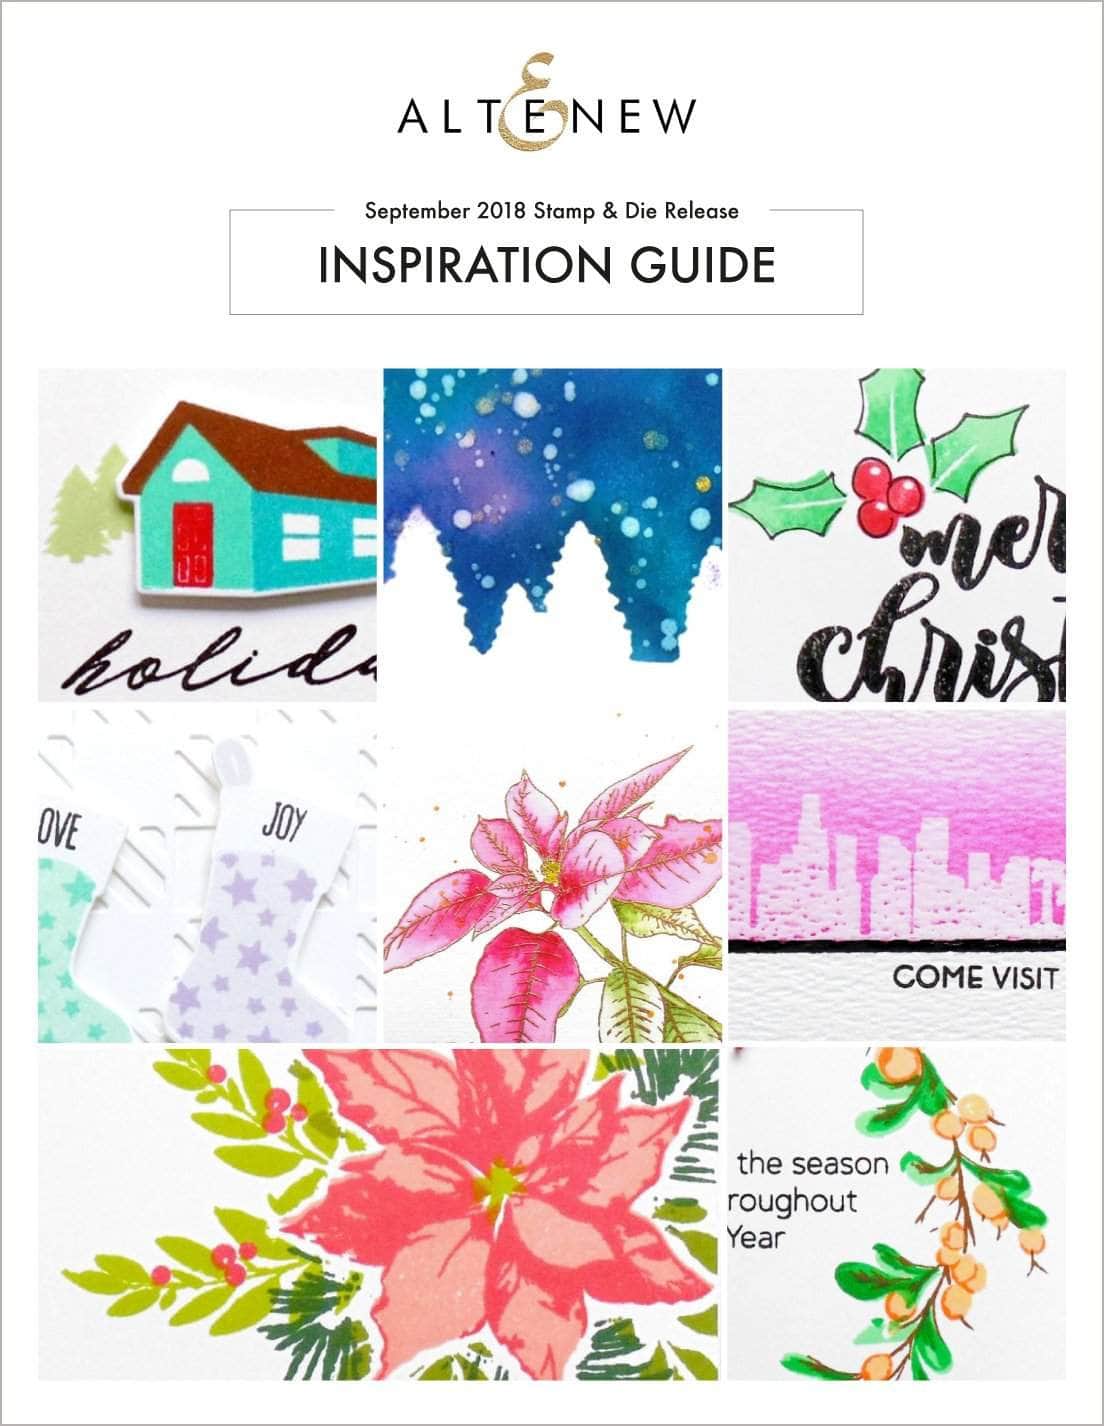 Printed Media Winter Memories Stamp & Die Release Inspiration Guide